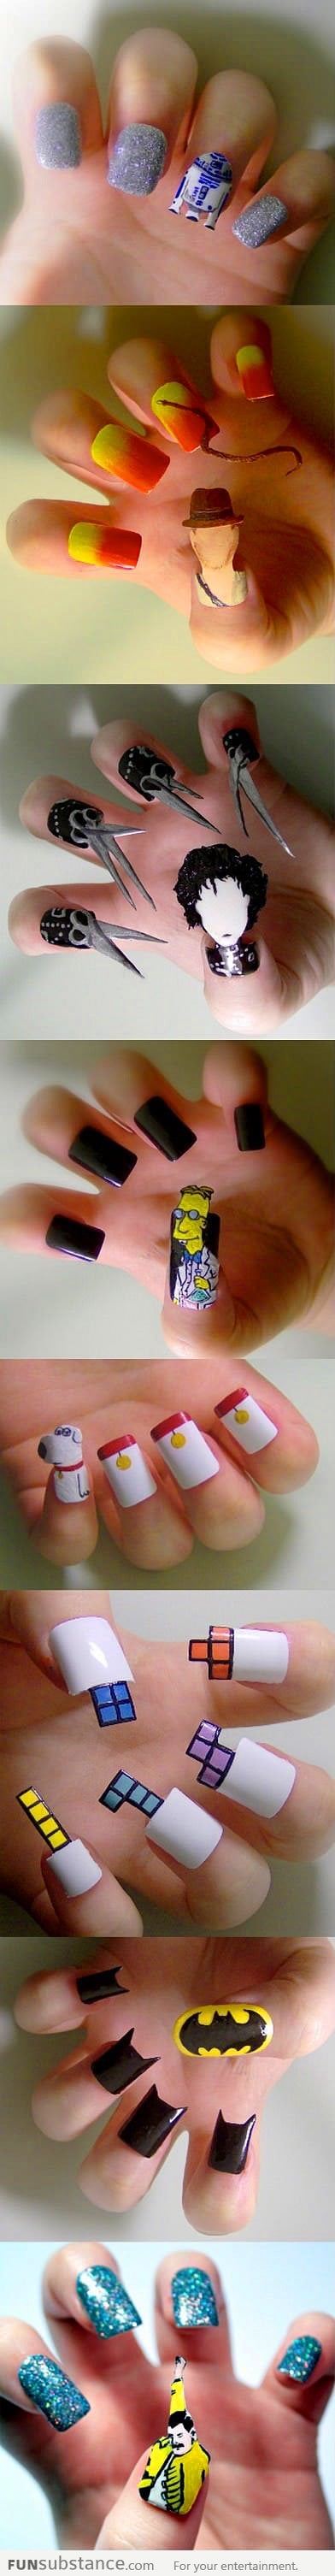 8 awesome nail art